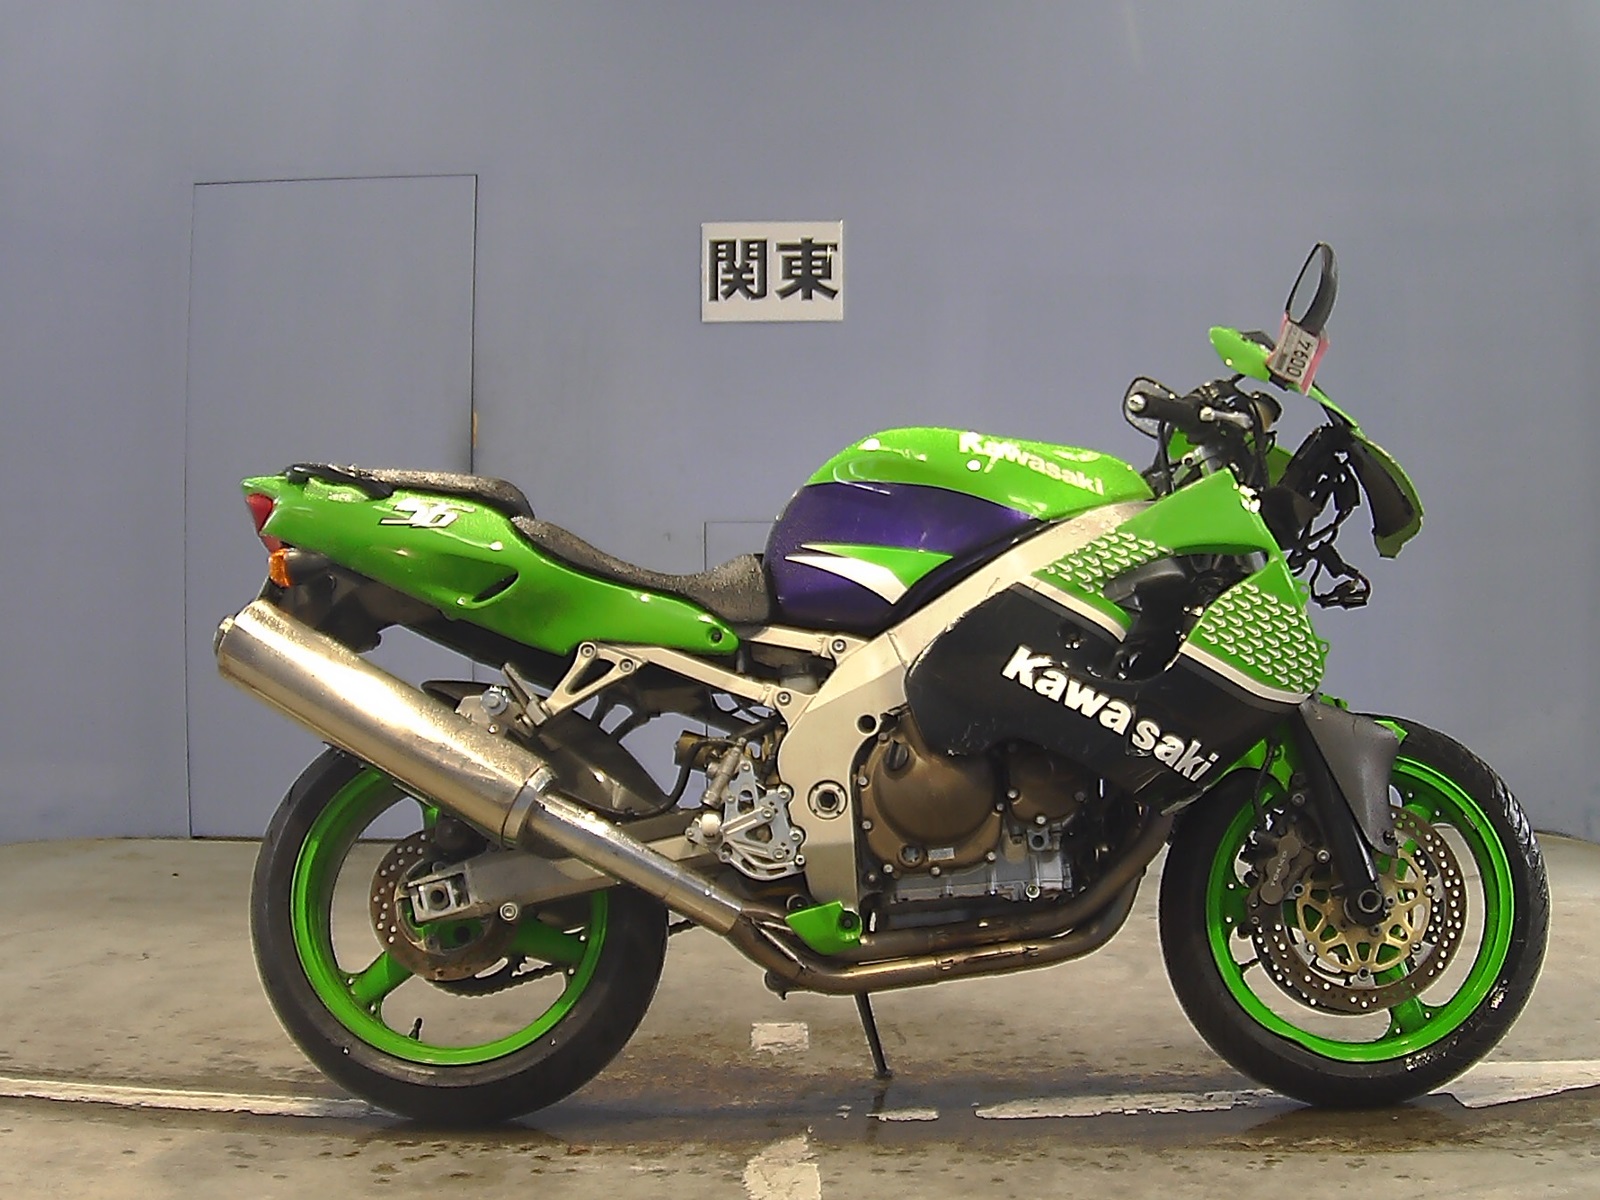 Мотоцикл kawasaki ninja zx-9r 1997: что необходимо знать